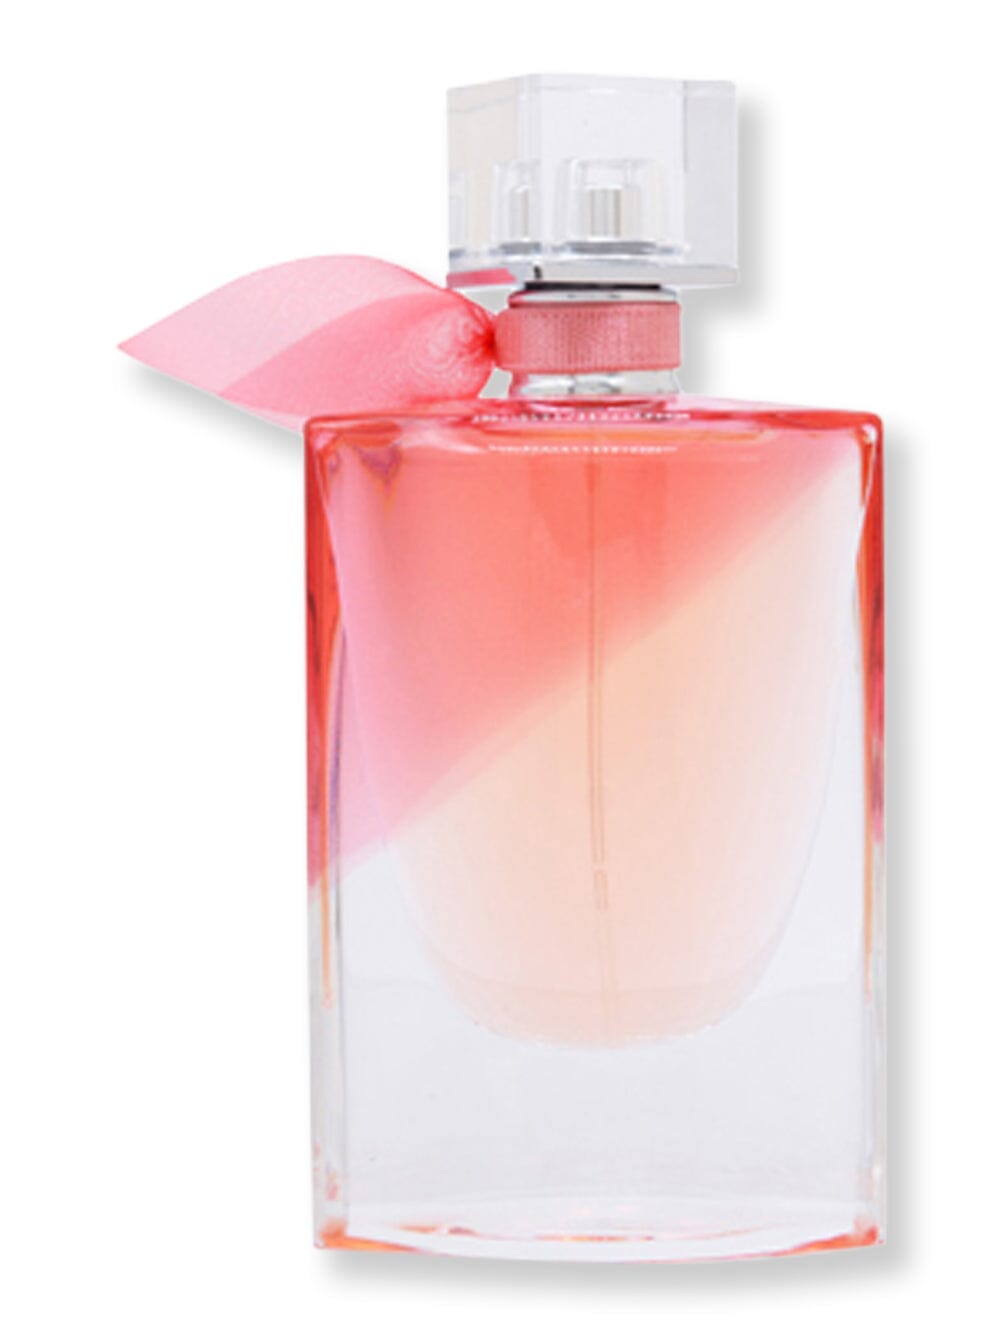 Lancome Lancome La Vie Est Belle En Rose EDT Spray Tester 1.7 oz50 ml Perfume 